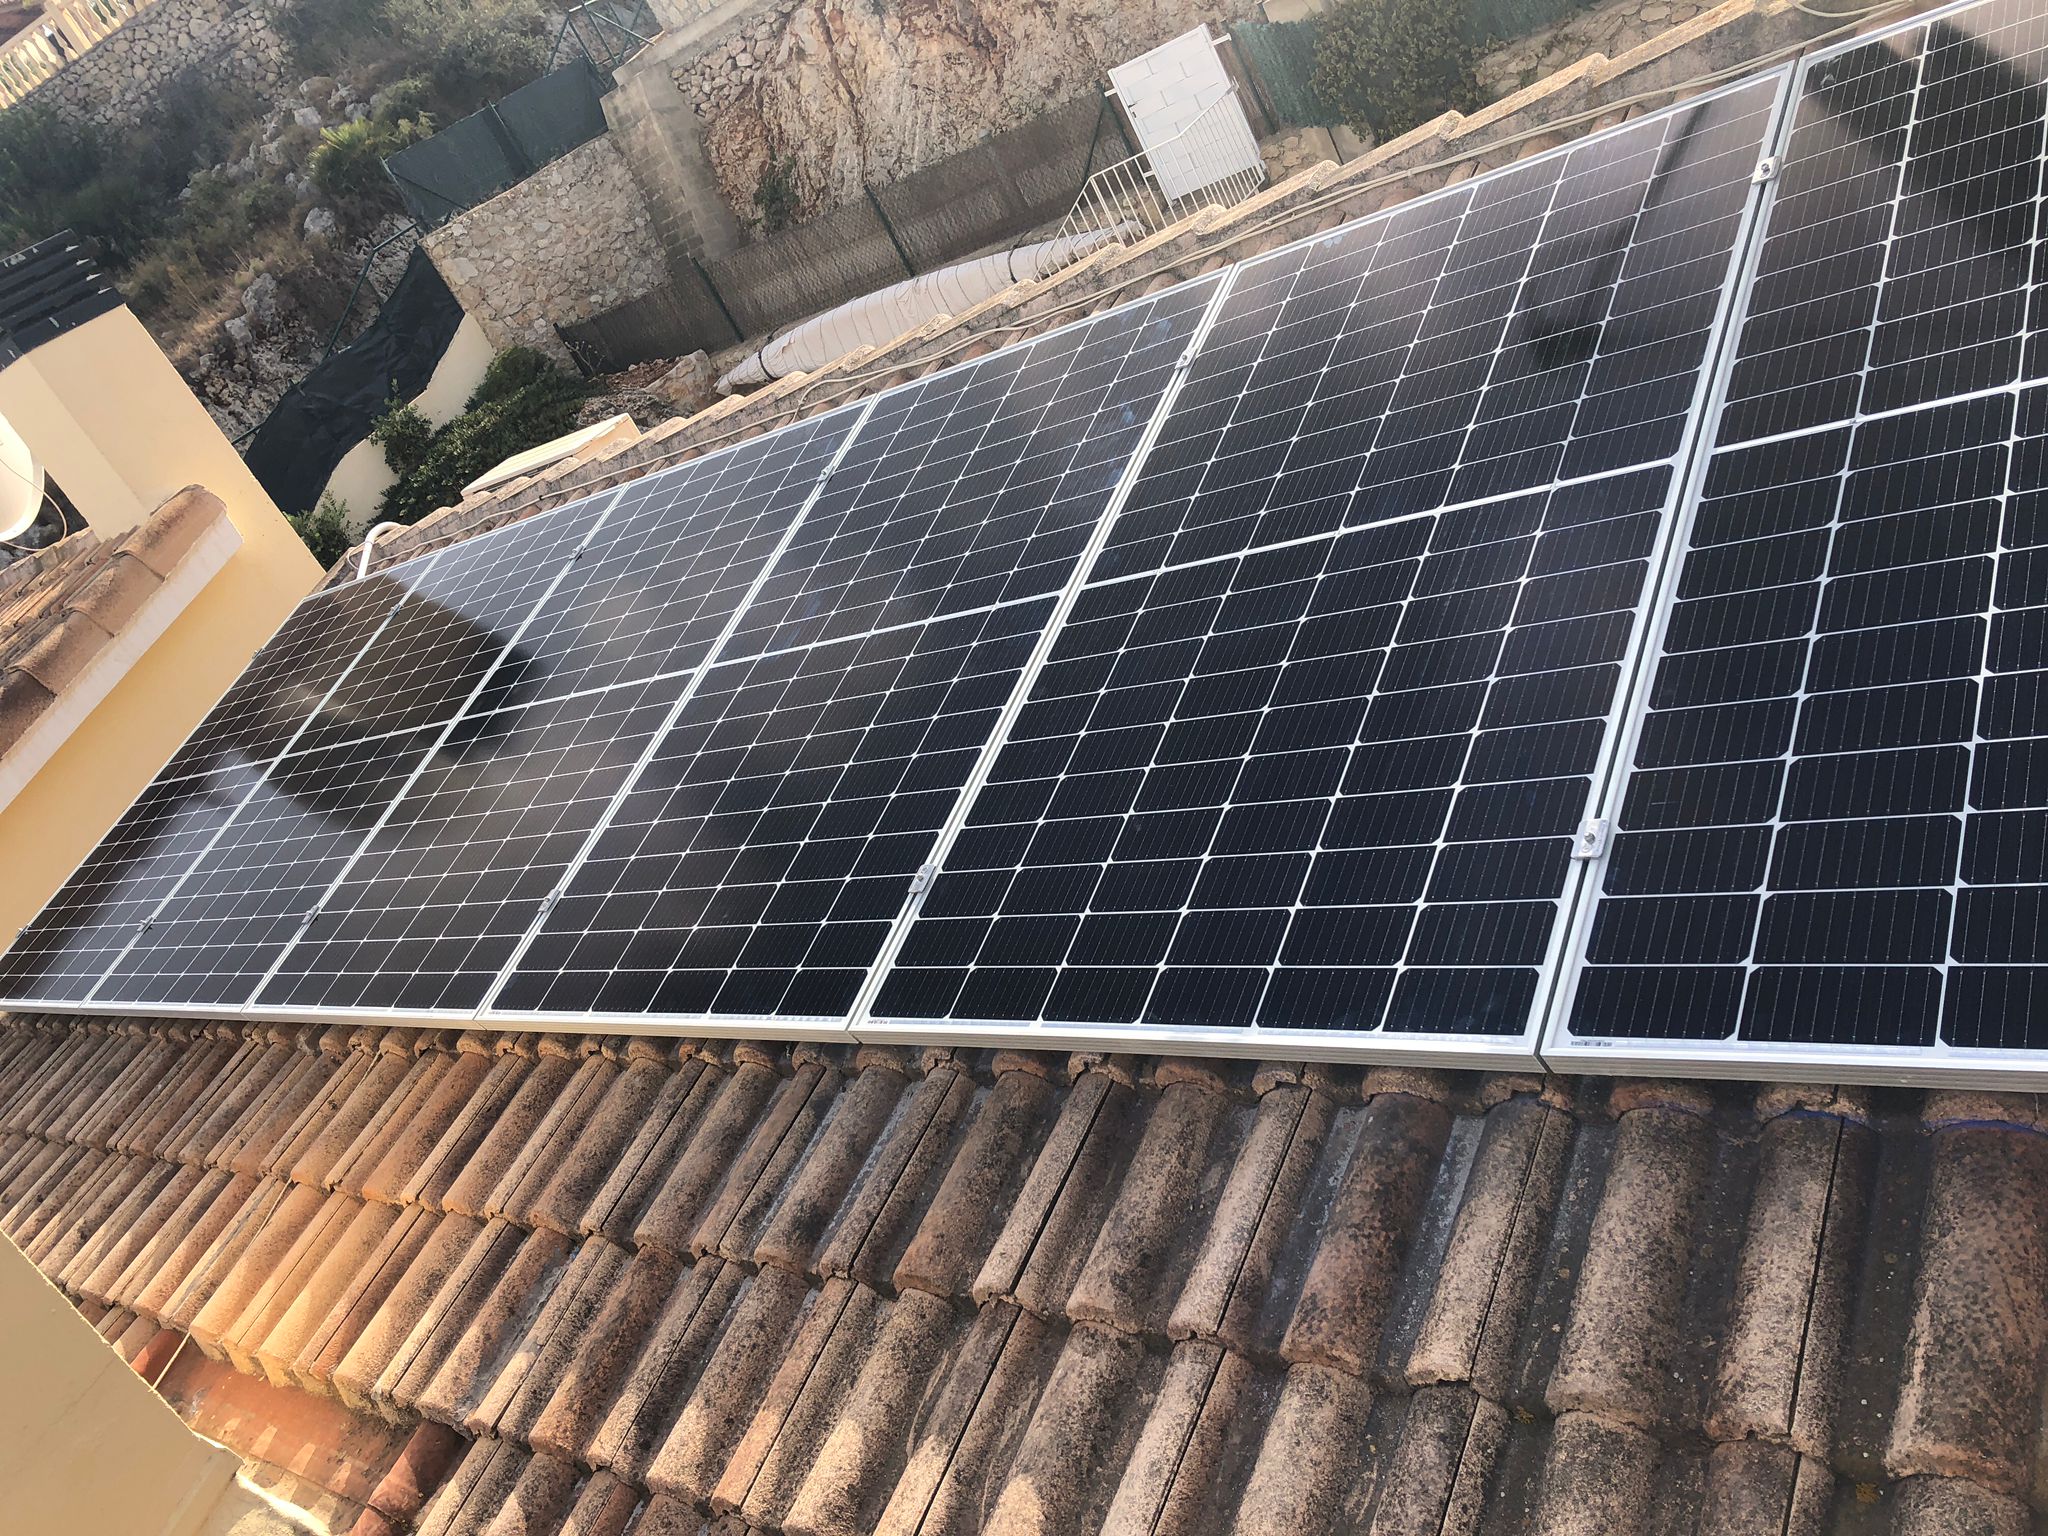 6X 380 wp Solar Panels, Bolerias, Alicante (Hybrid system)